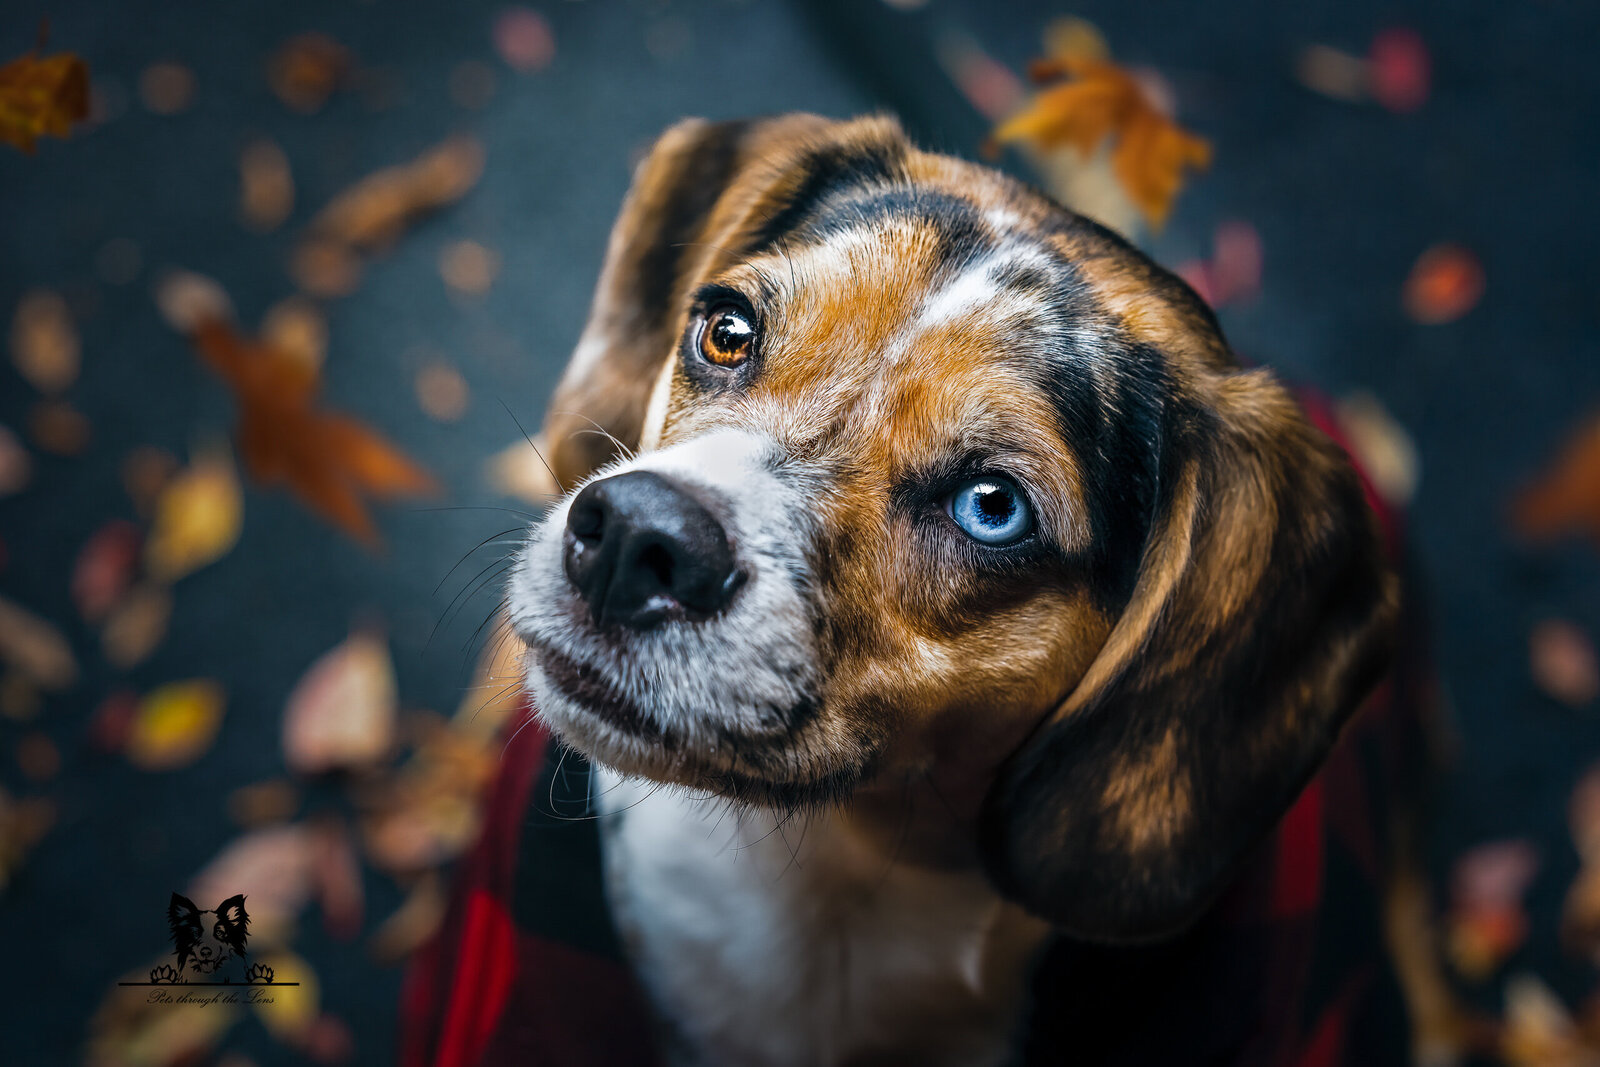 Pets-through-the-Lens-Photography-Dog-Portraits